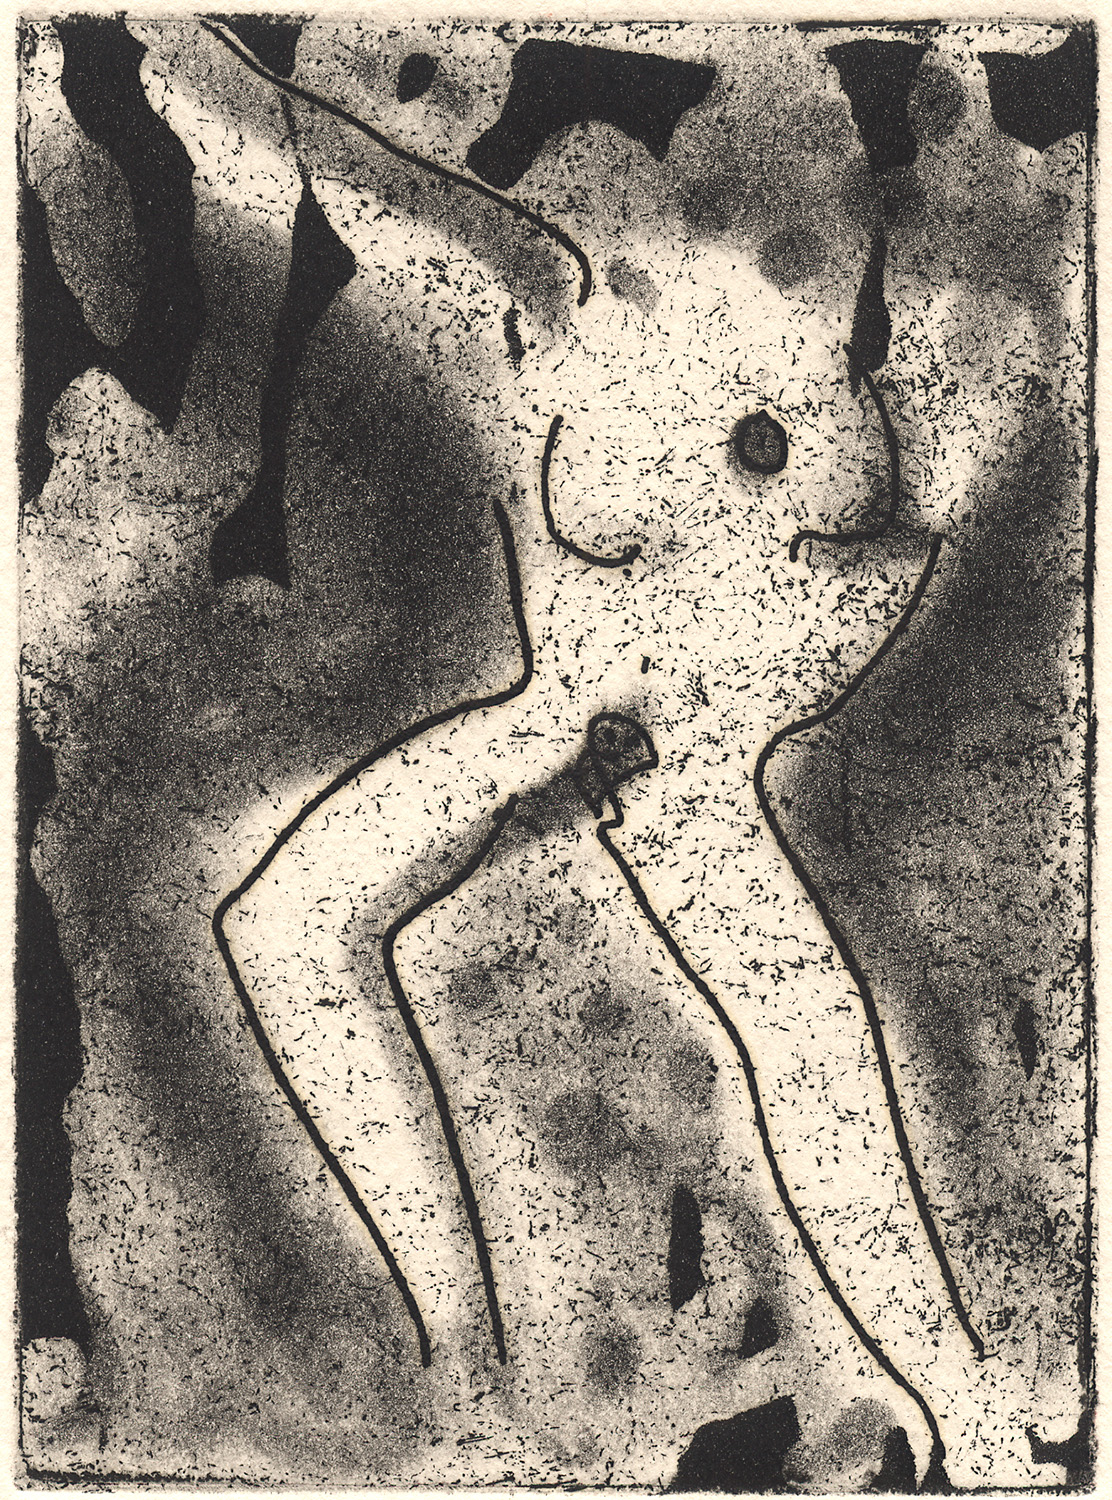 Indira-Cesarine-Portrait-of-a-Girl-No-2-Intaglio-Ink-on-Rag-Paper-The-Sappho-Series-1993.jpg